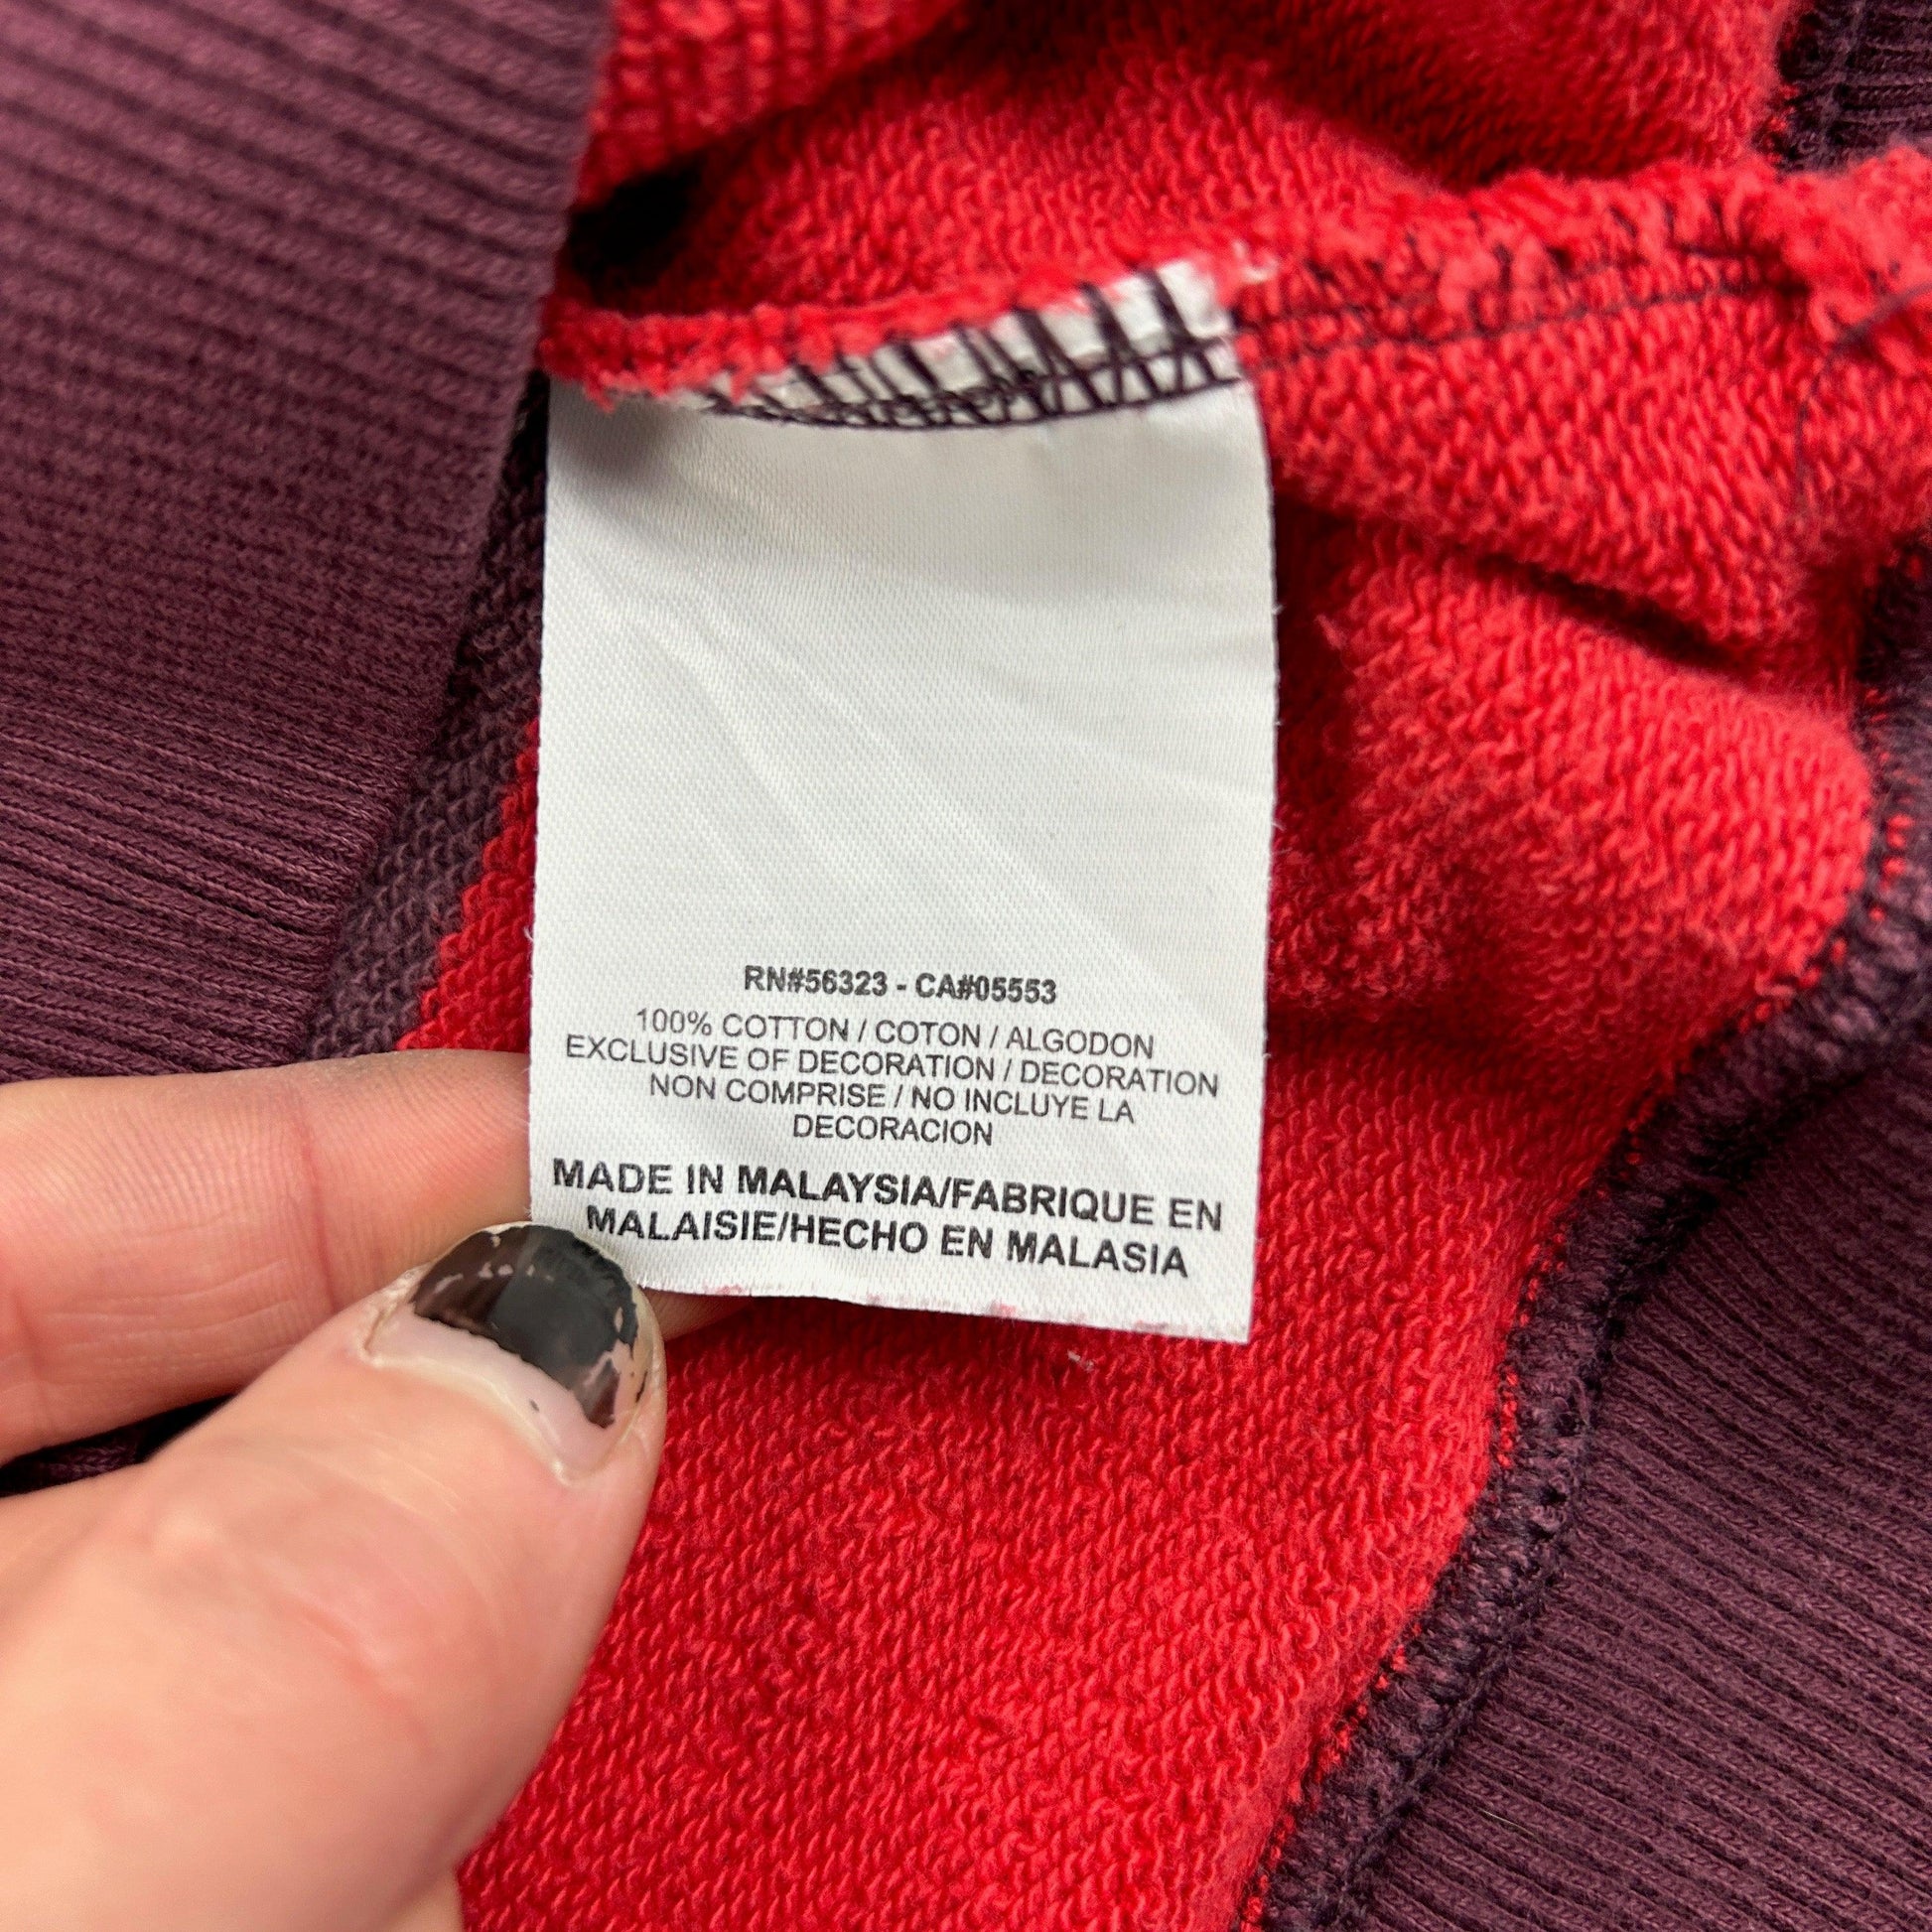 Vintage Nike Striped Sweatshirt Size M - Known Source